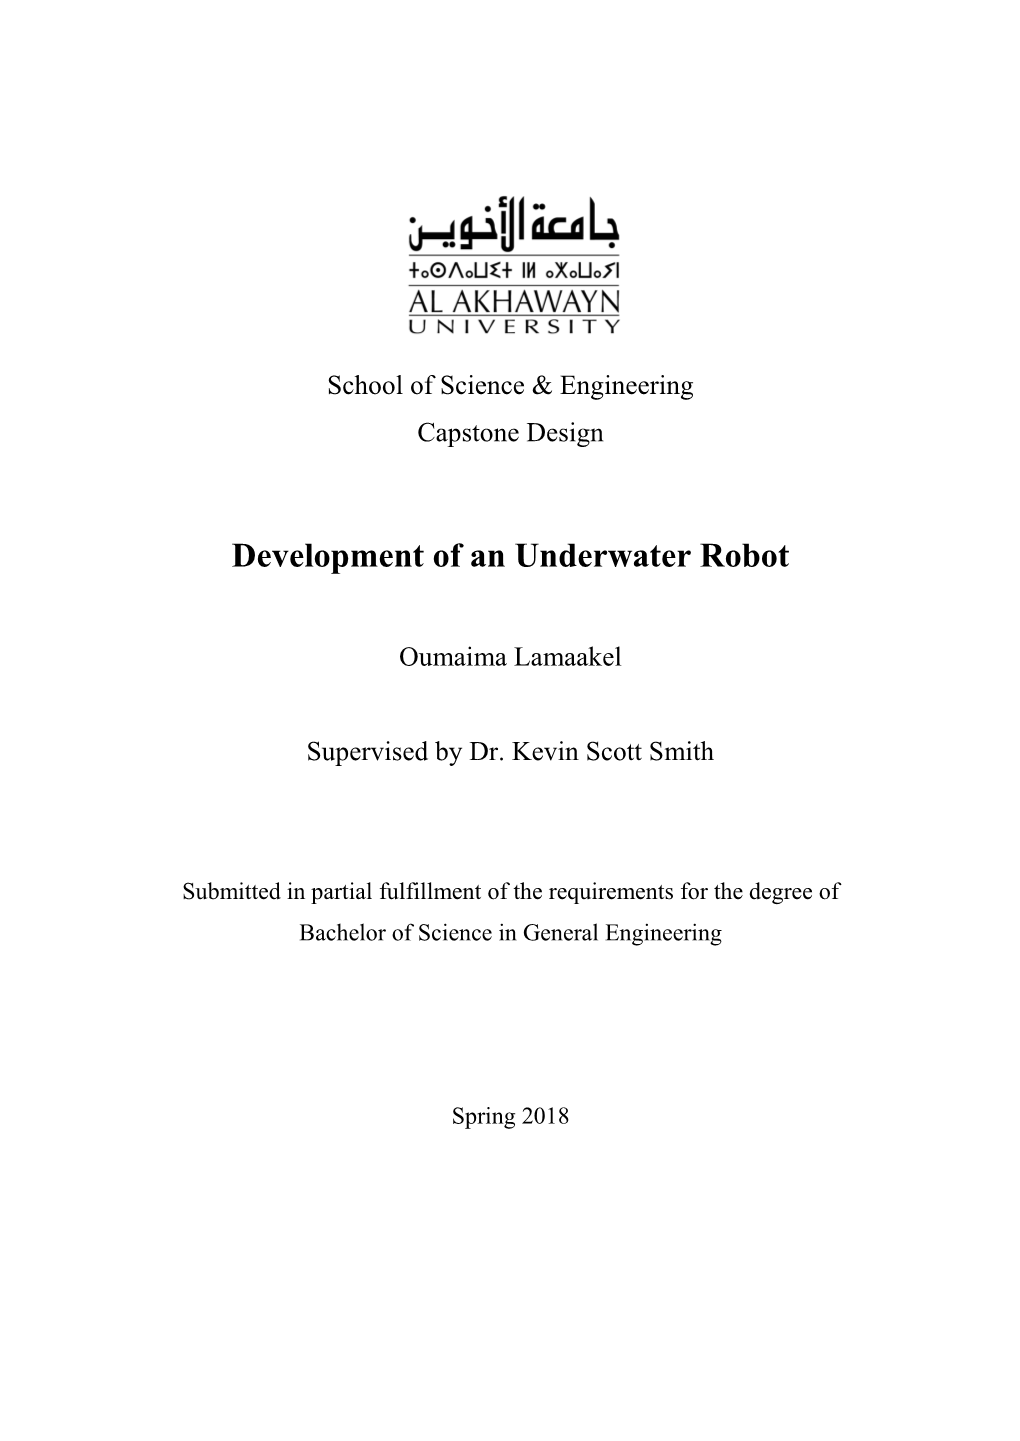 Development of an Underwater Robot